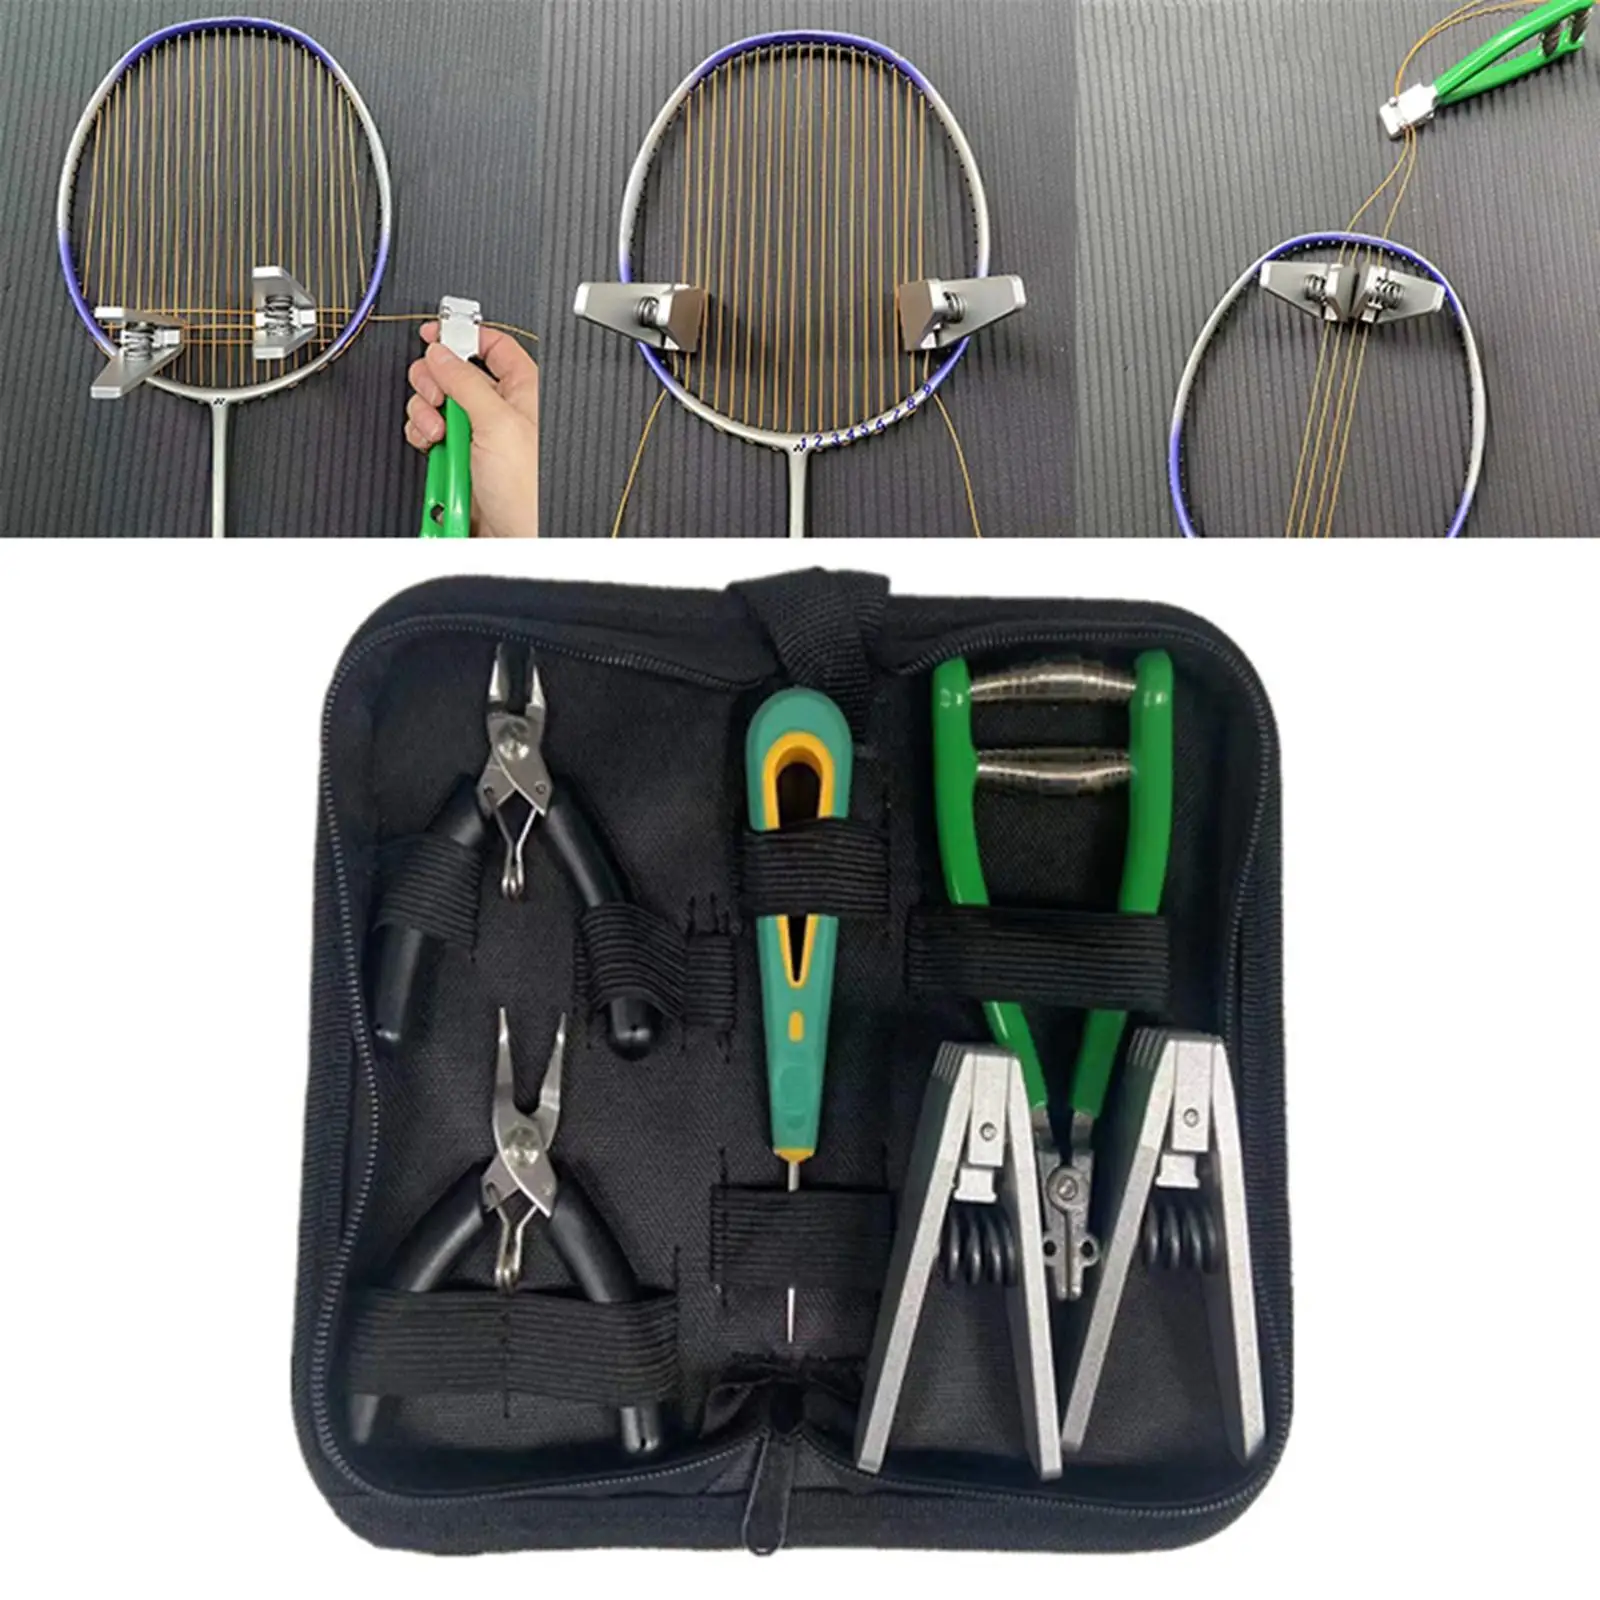 Pro Starting Stringing Clamp Tool Kit for Badminton Squash Tennis Racquet